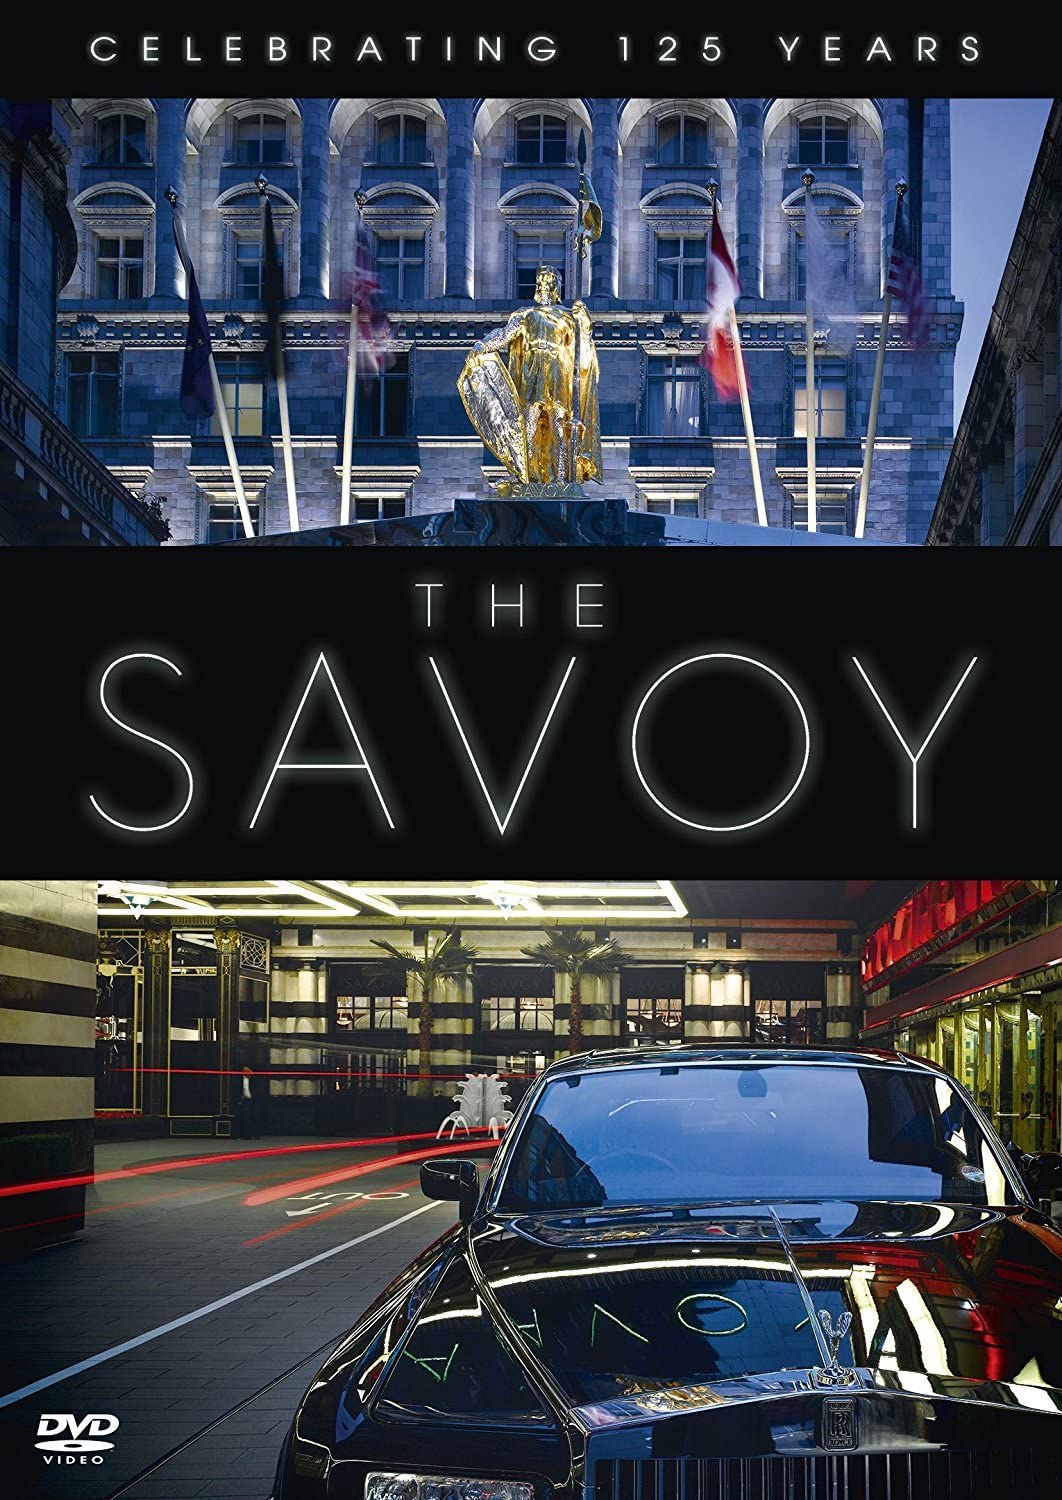 The Savoy - Documentary [DVD]